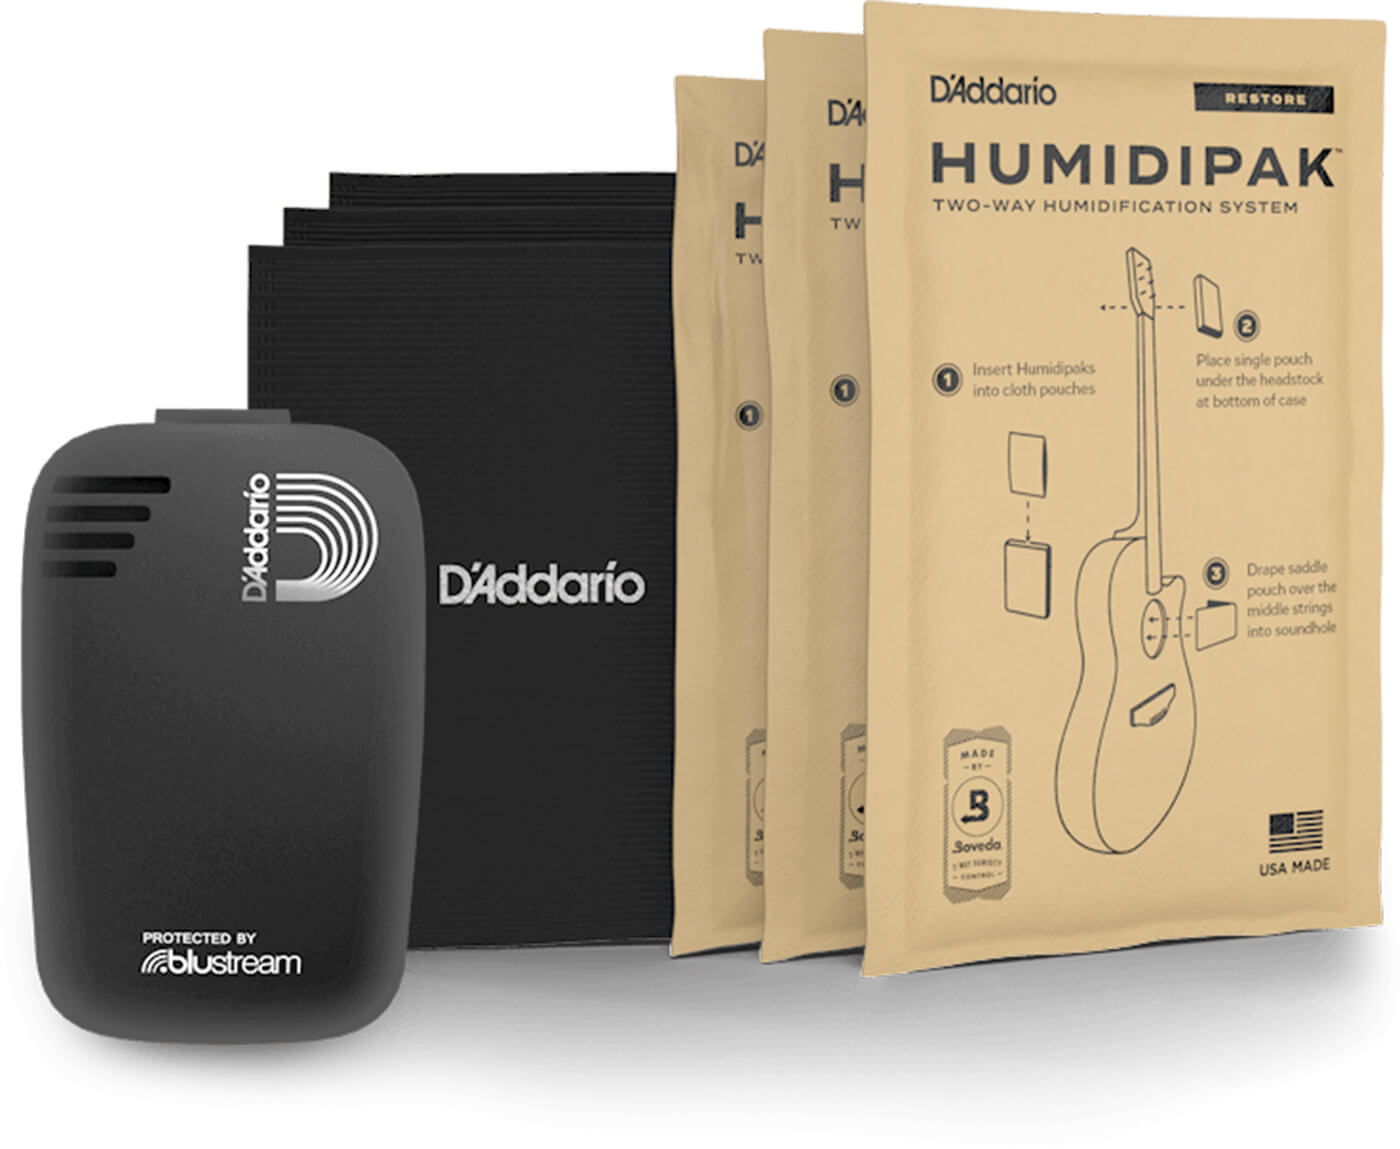 D'Addario Humidikit Bluetooth humidity control system.